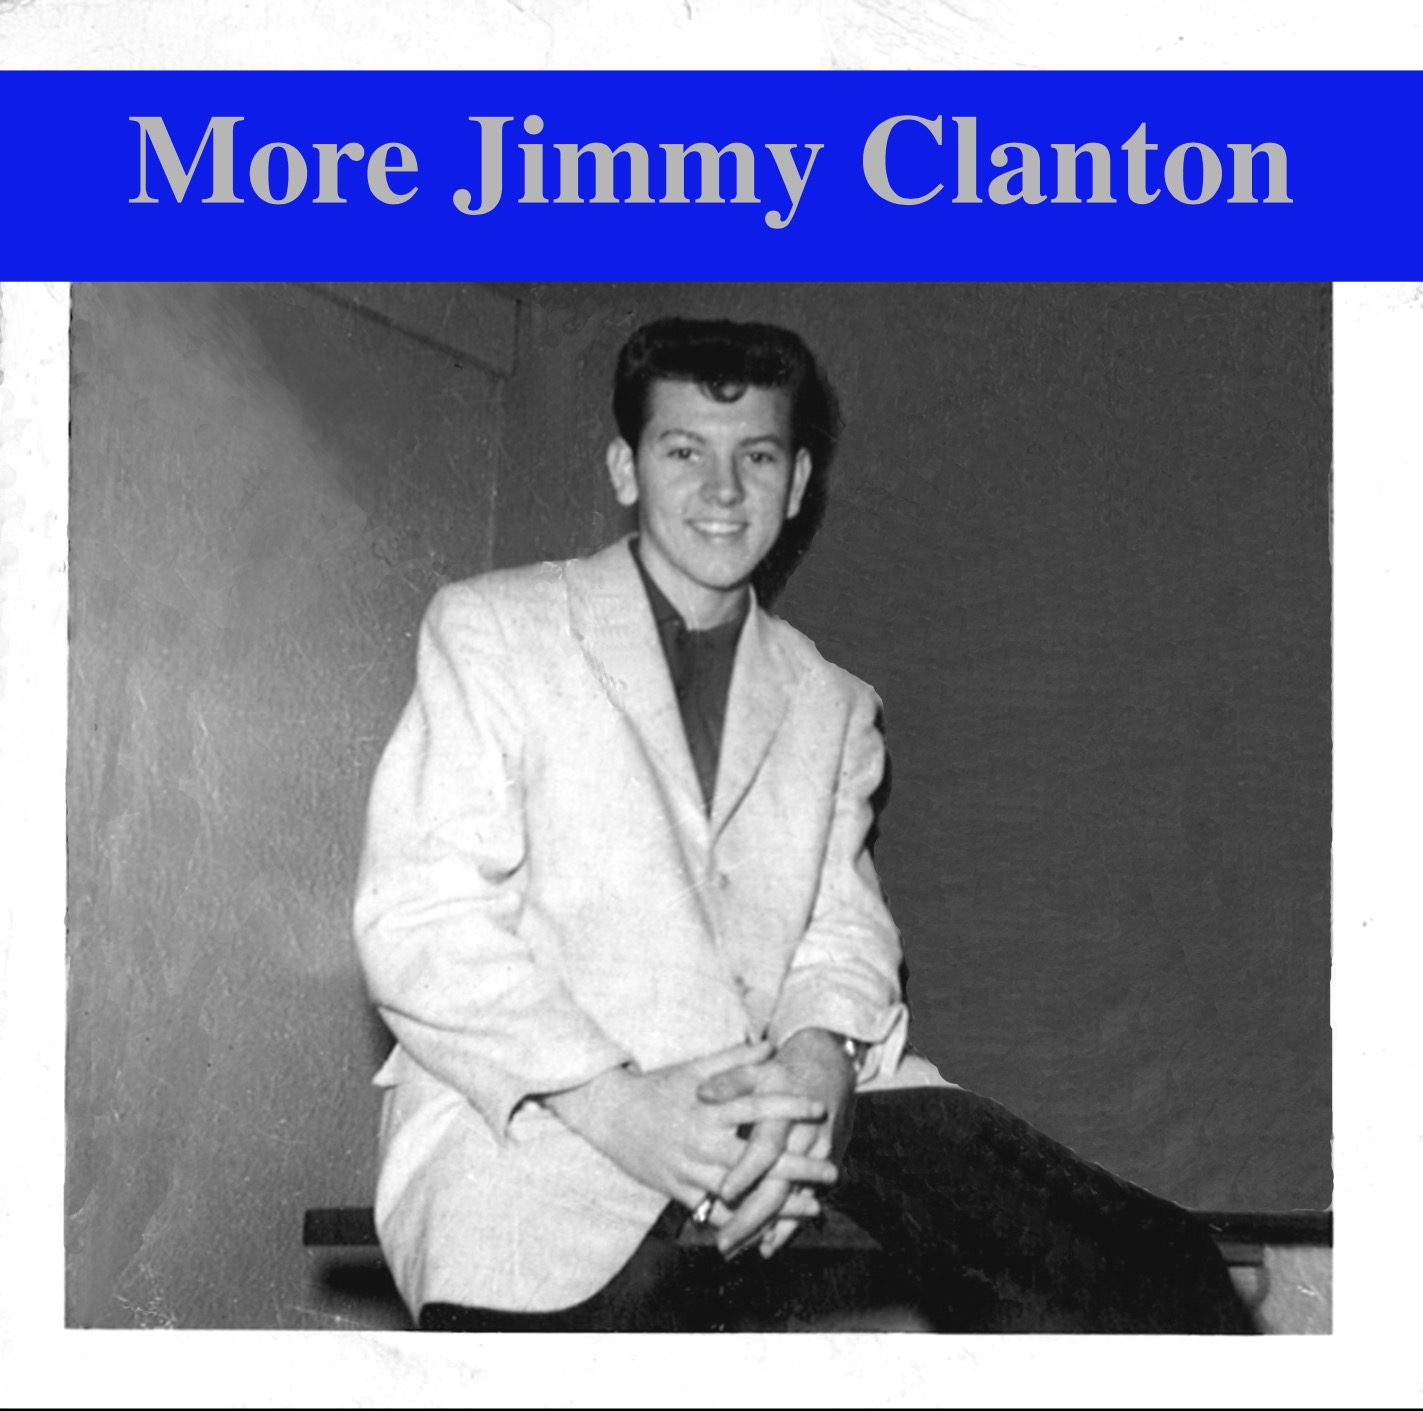 More Jimmy Clanton